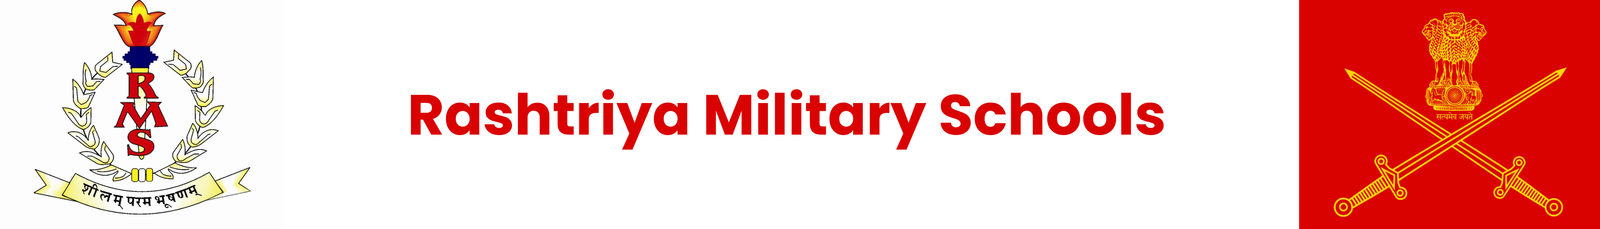 Military School